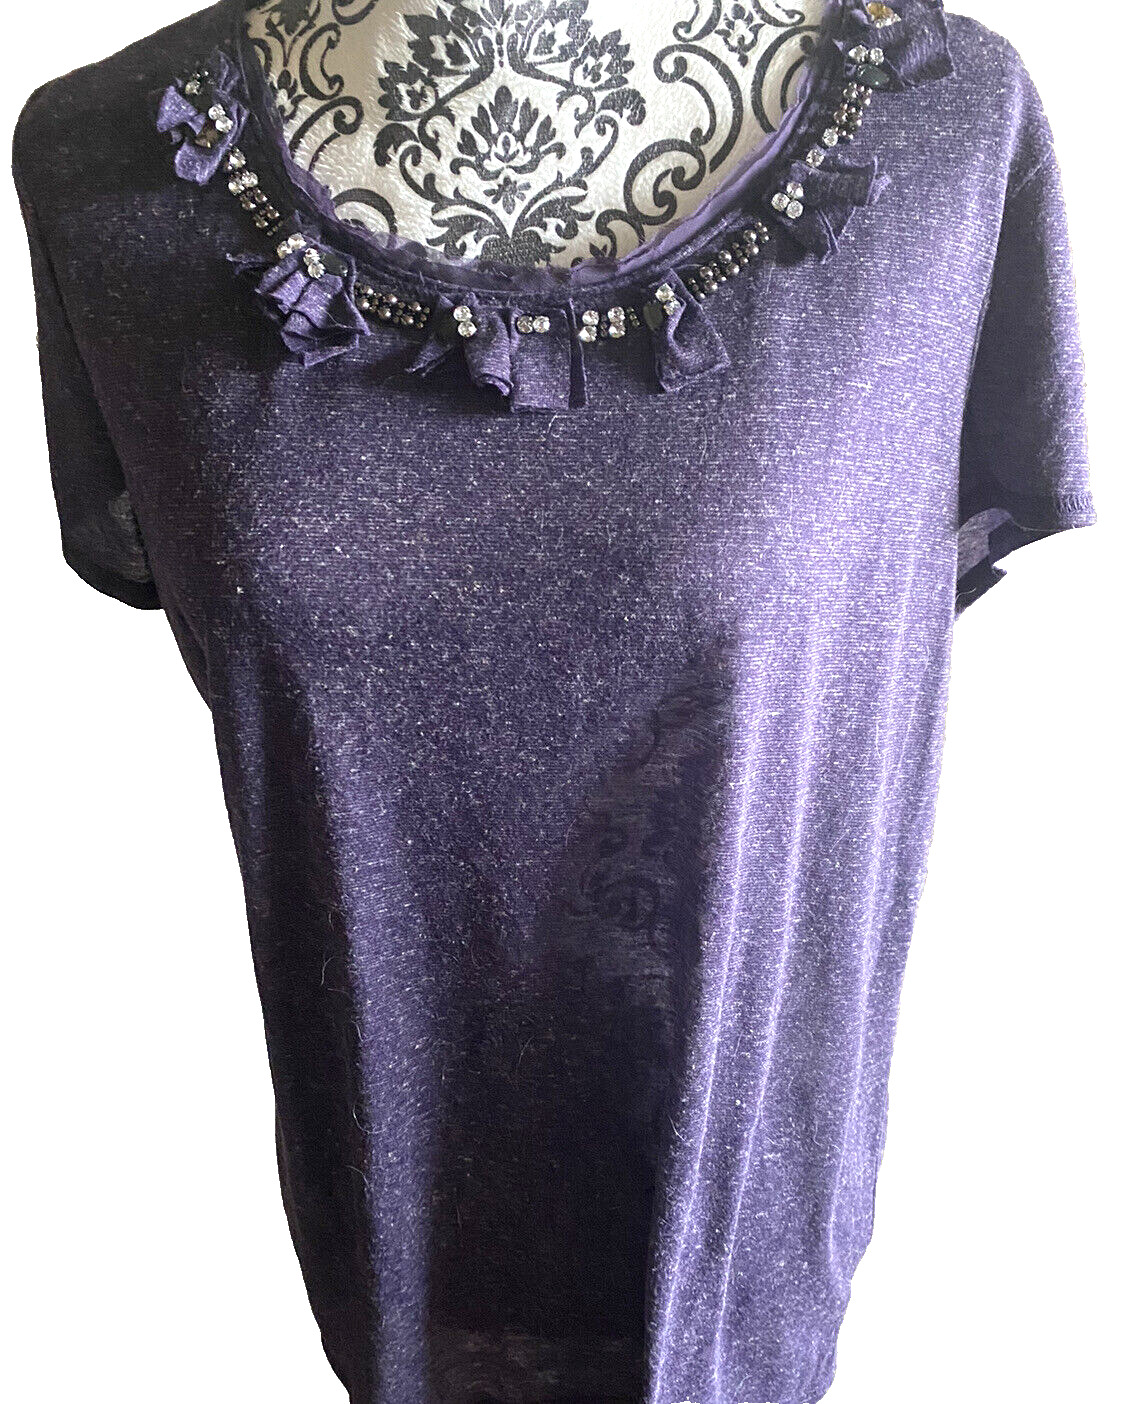 Simply Vera Wang XL Blouse X Large Purple Rhinestone Beaded Top Shirt Pretty